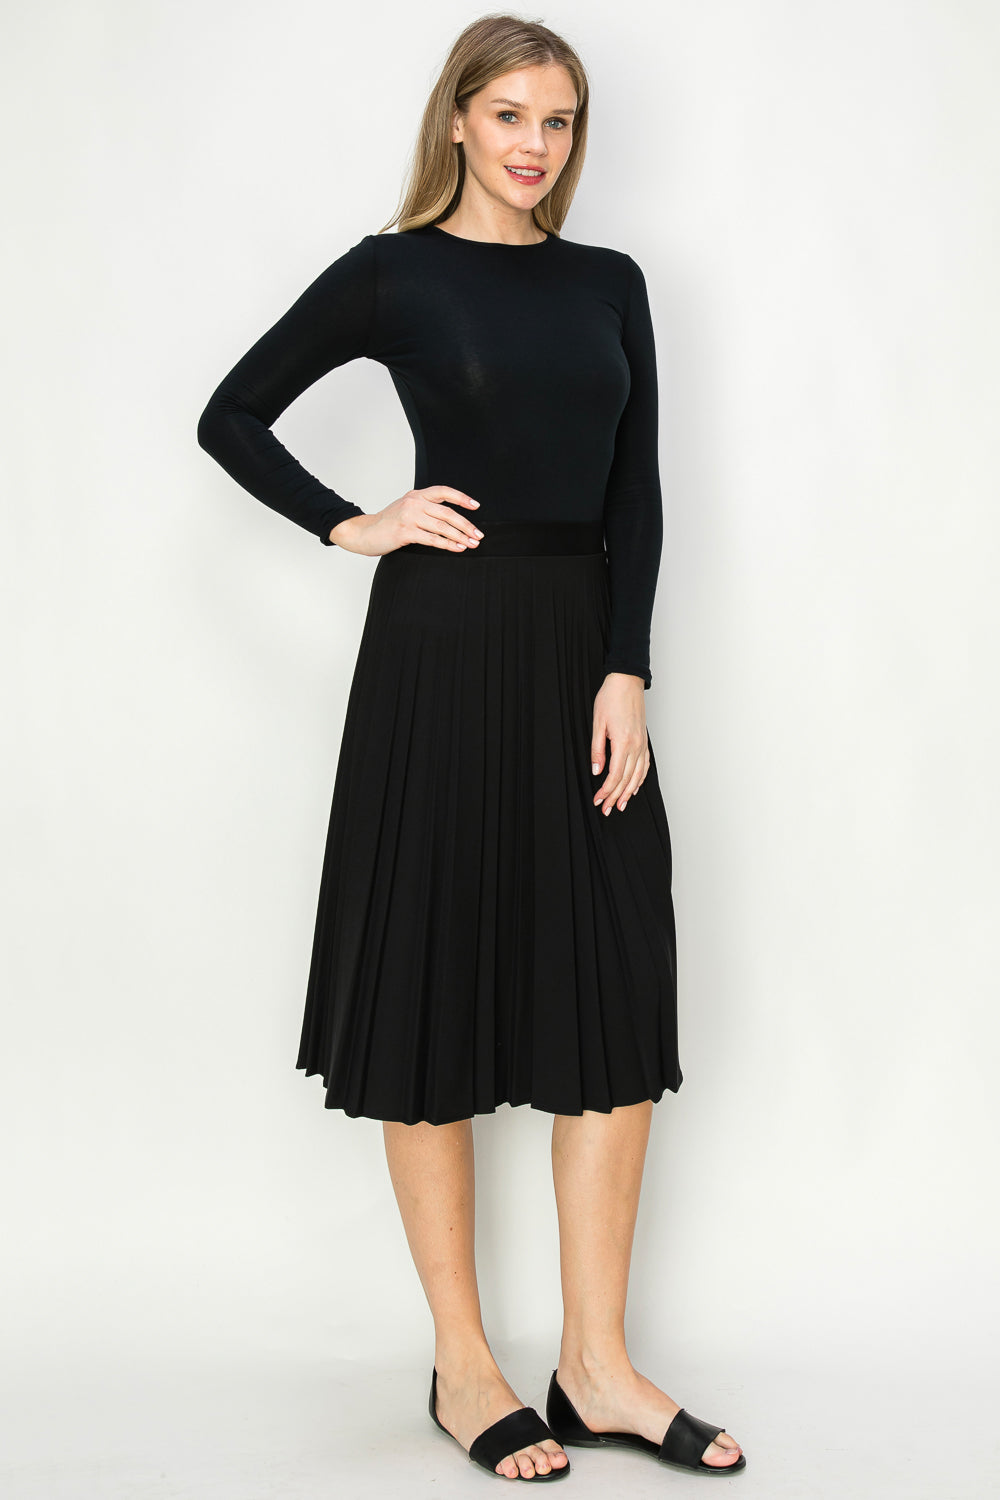 Novelty Pleated skirt elastic waist available in knee length to Maxi Length